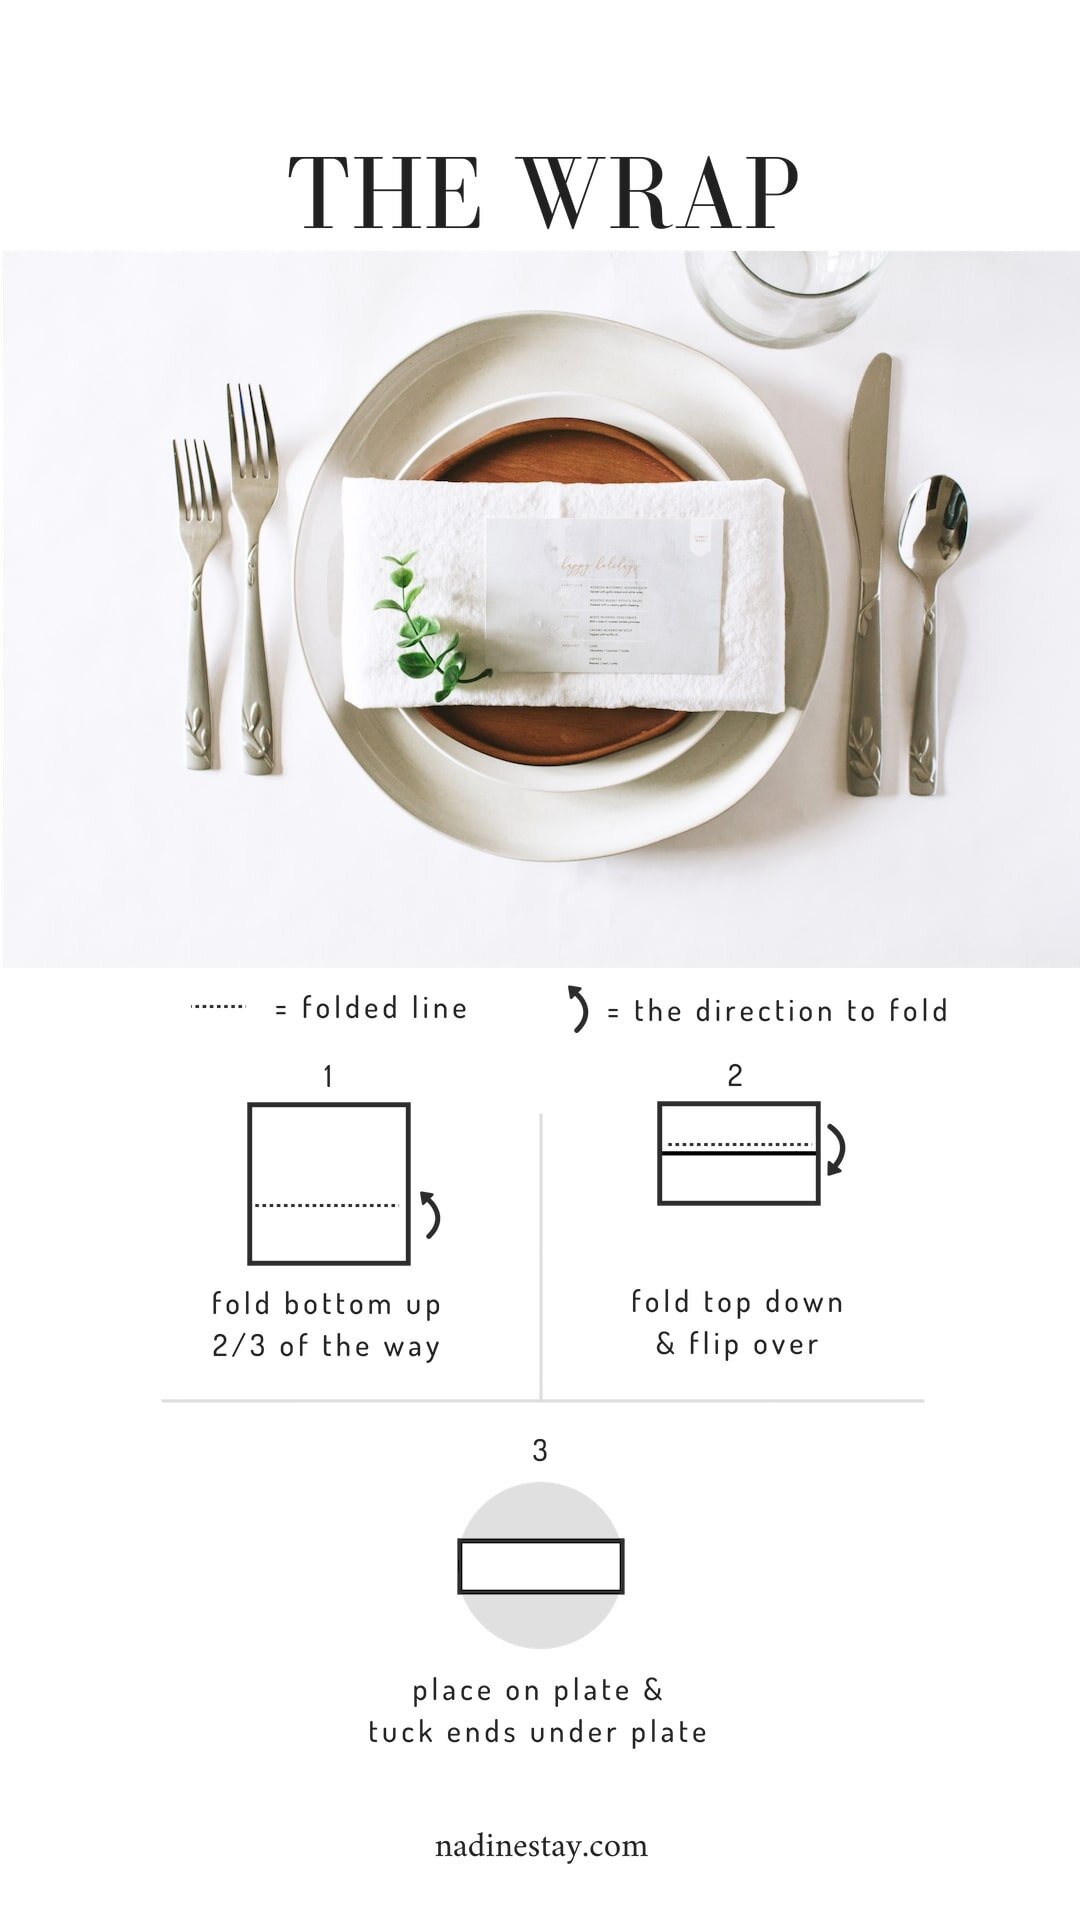 5 easy ways to fold a cloth napkin - place setting inspiration for weddings, birthdays, holidays, and events. Tablescape and table setting inspiration - The wrap napkin fold